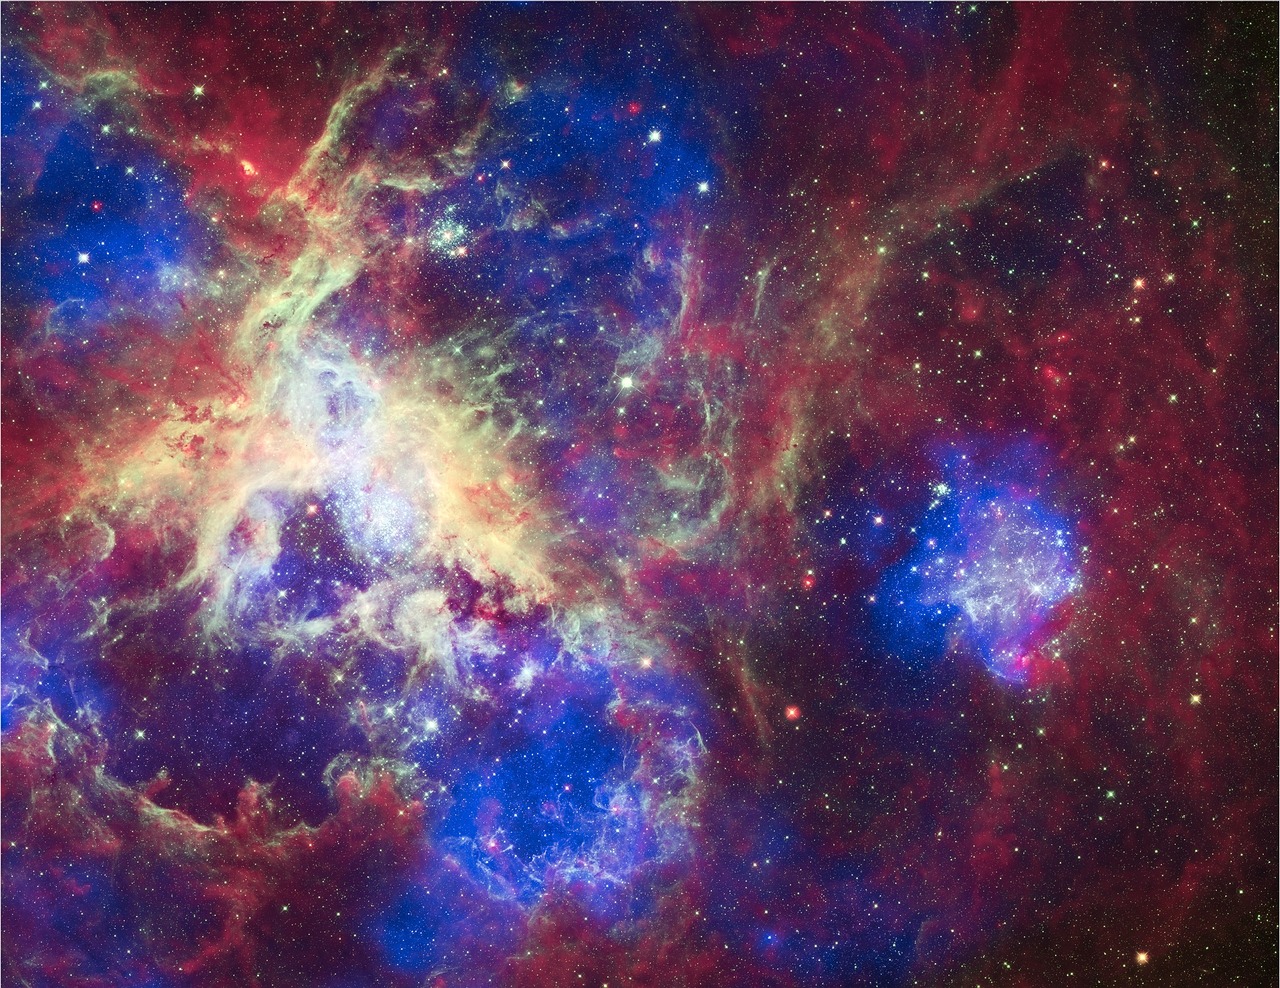 tarantula nebula, 30 doradus, ngc 2070-60549.jpg